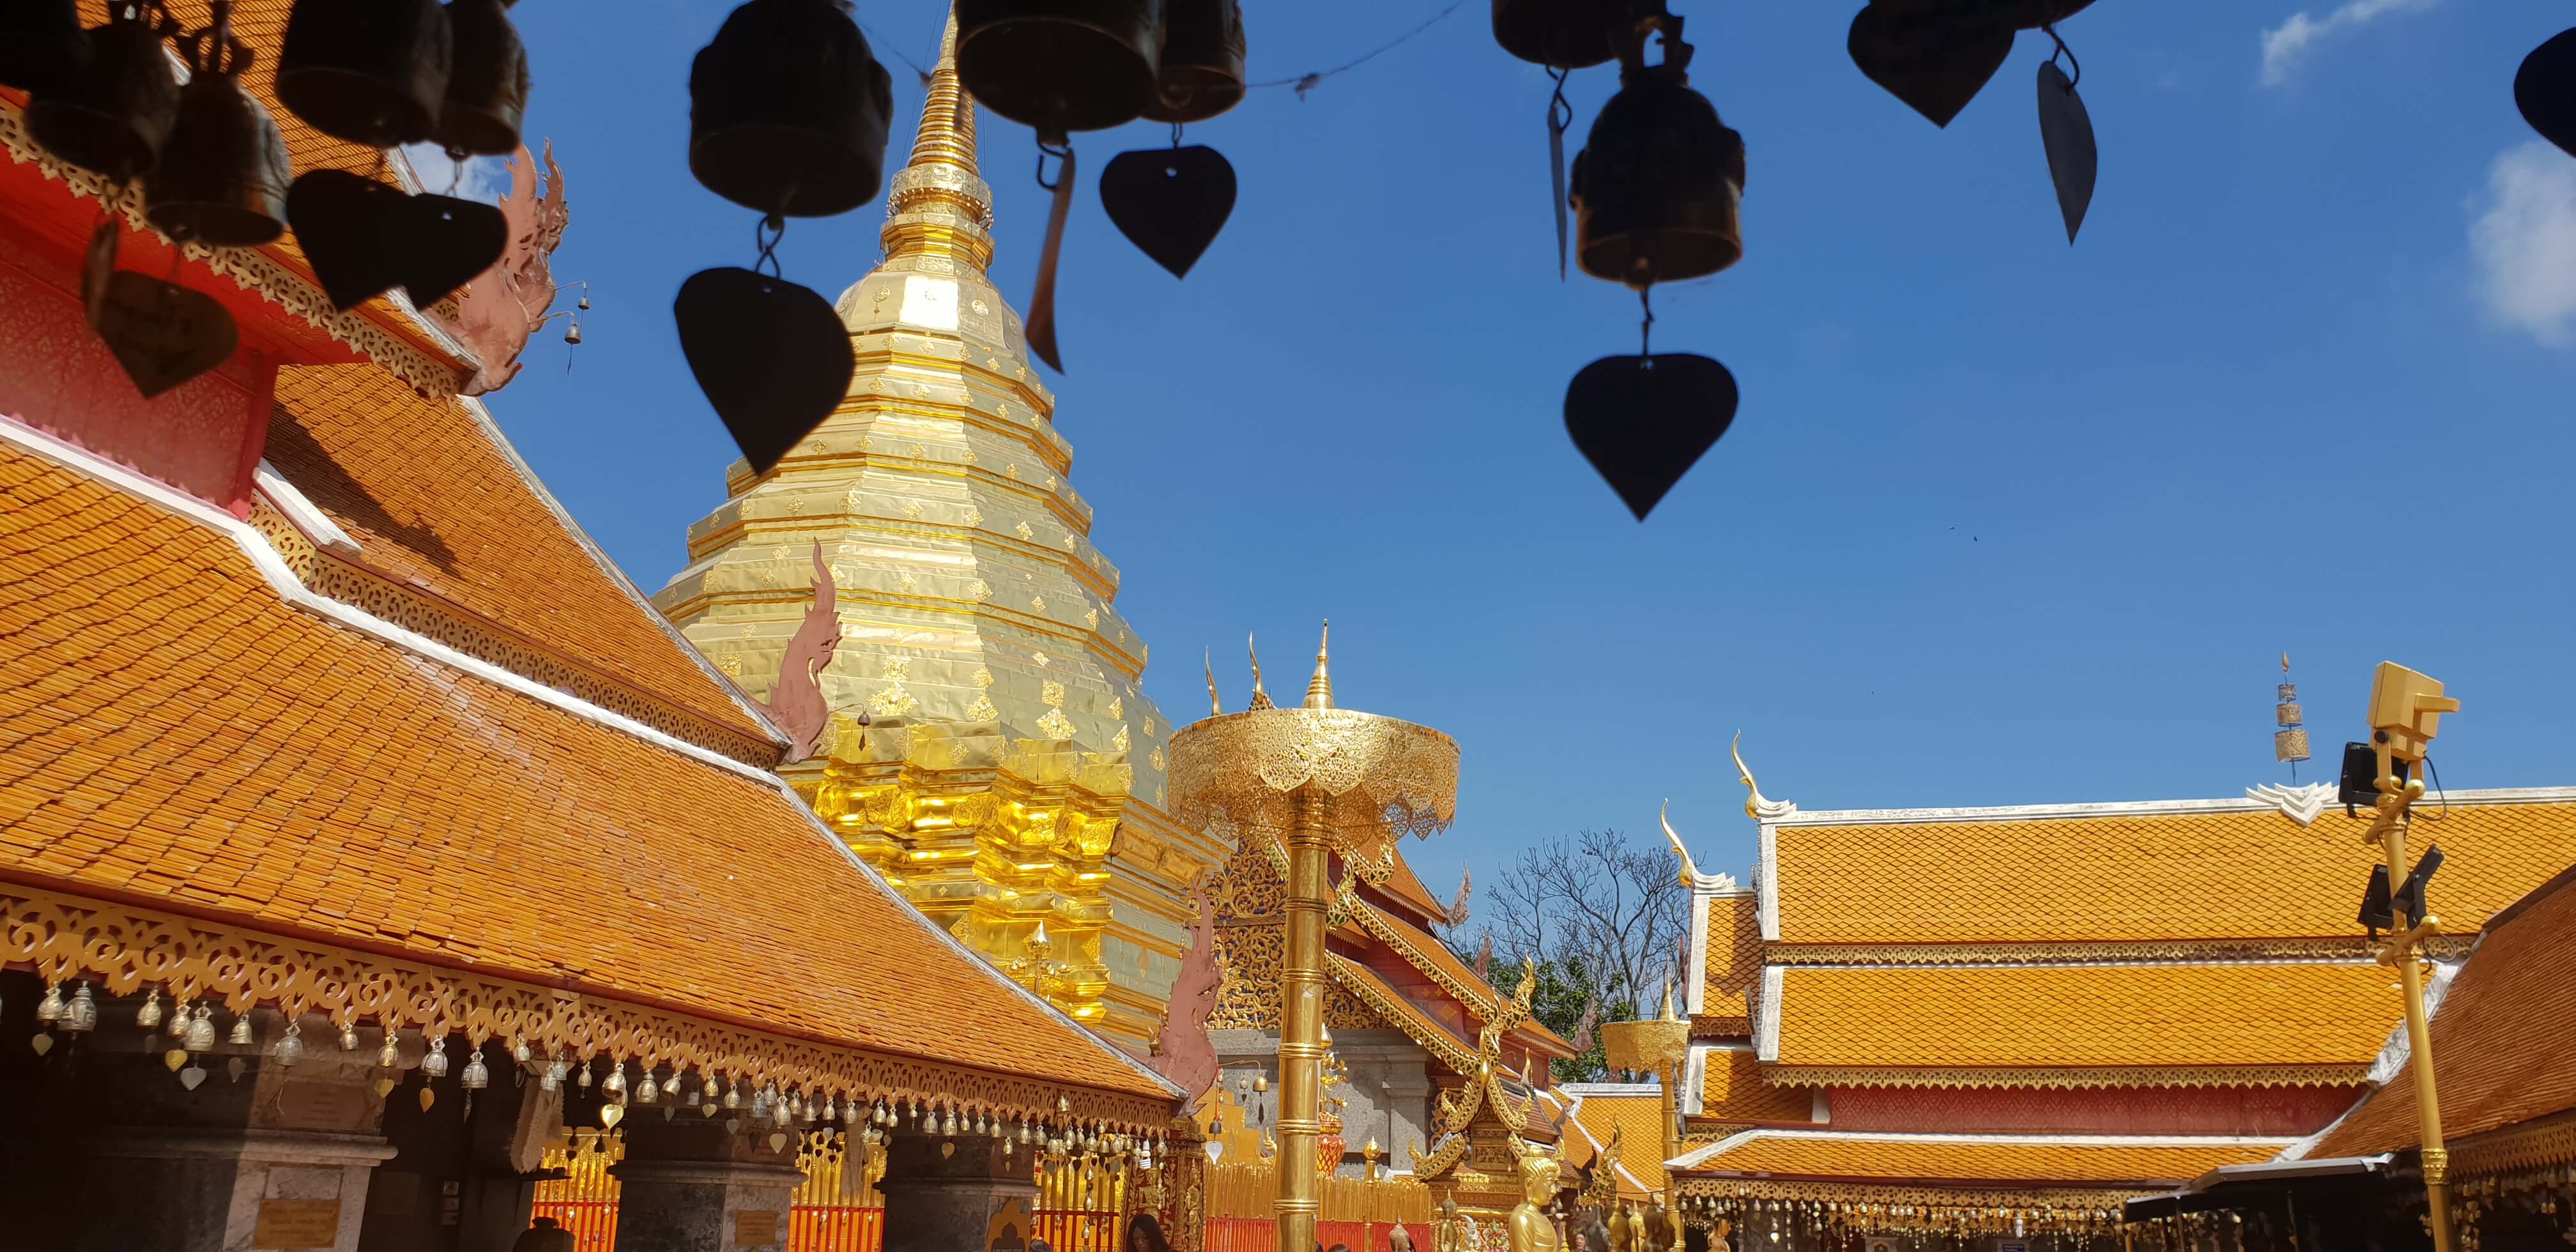 The stunning Wat Phra That Doi Suthep